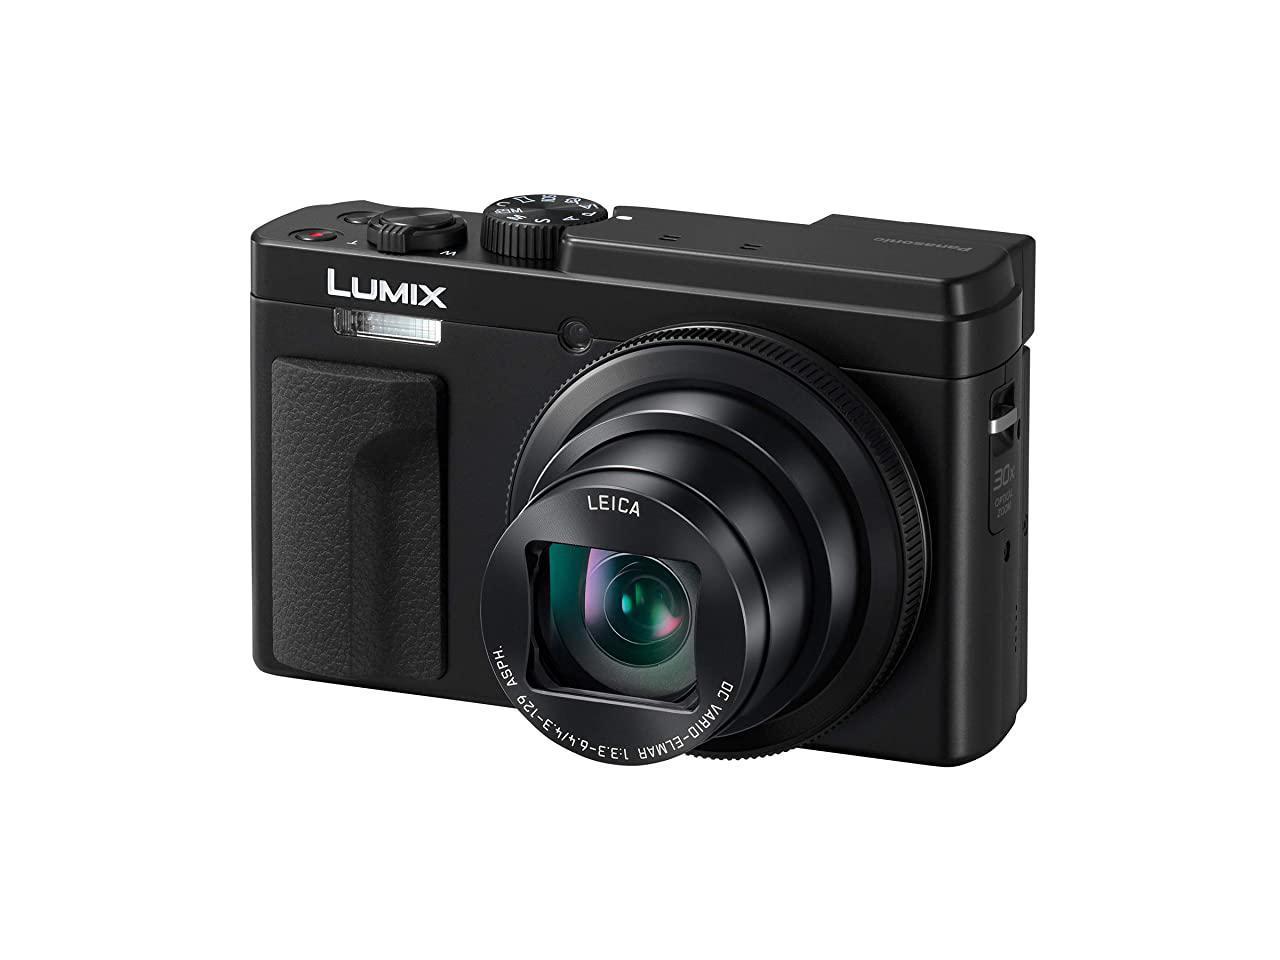 Vernietigen slim suiker LUMIX ZS80 20.3MP Digital Camera, 30x 24-720mm Travel Zoom Lens, 4K Video,  Optical Image Stabilizer and 3.0-inch Display – Point & Shoot Camera with  Lecia Lens - DC-ZS80K (Black) - Newegg.com